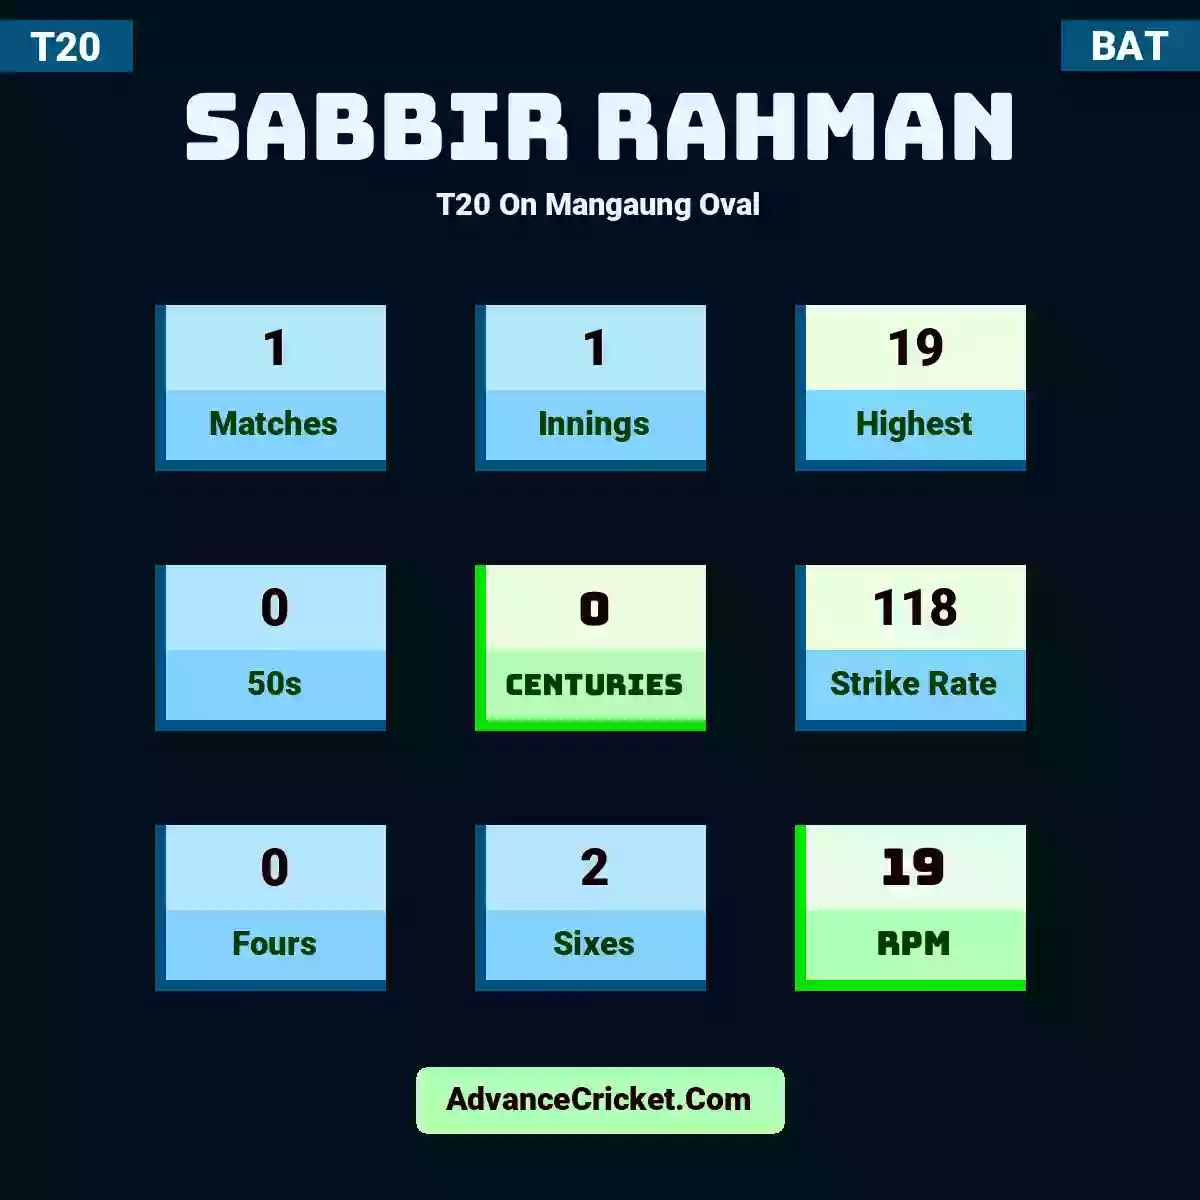 Sabbir Rahman T20  On Mangaung Oval, Sabbir Rahman played 1 matches, scored 19 runs as highest, 0 half-centuries, and 0 centuries, with a strike rate of 118. S.Rahman hit 0 fours and 2 sixes, with an RPM of 19.